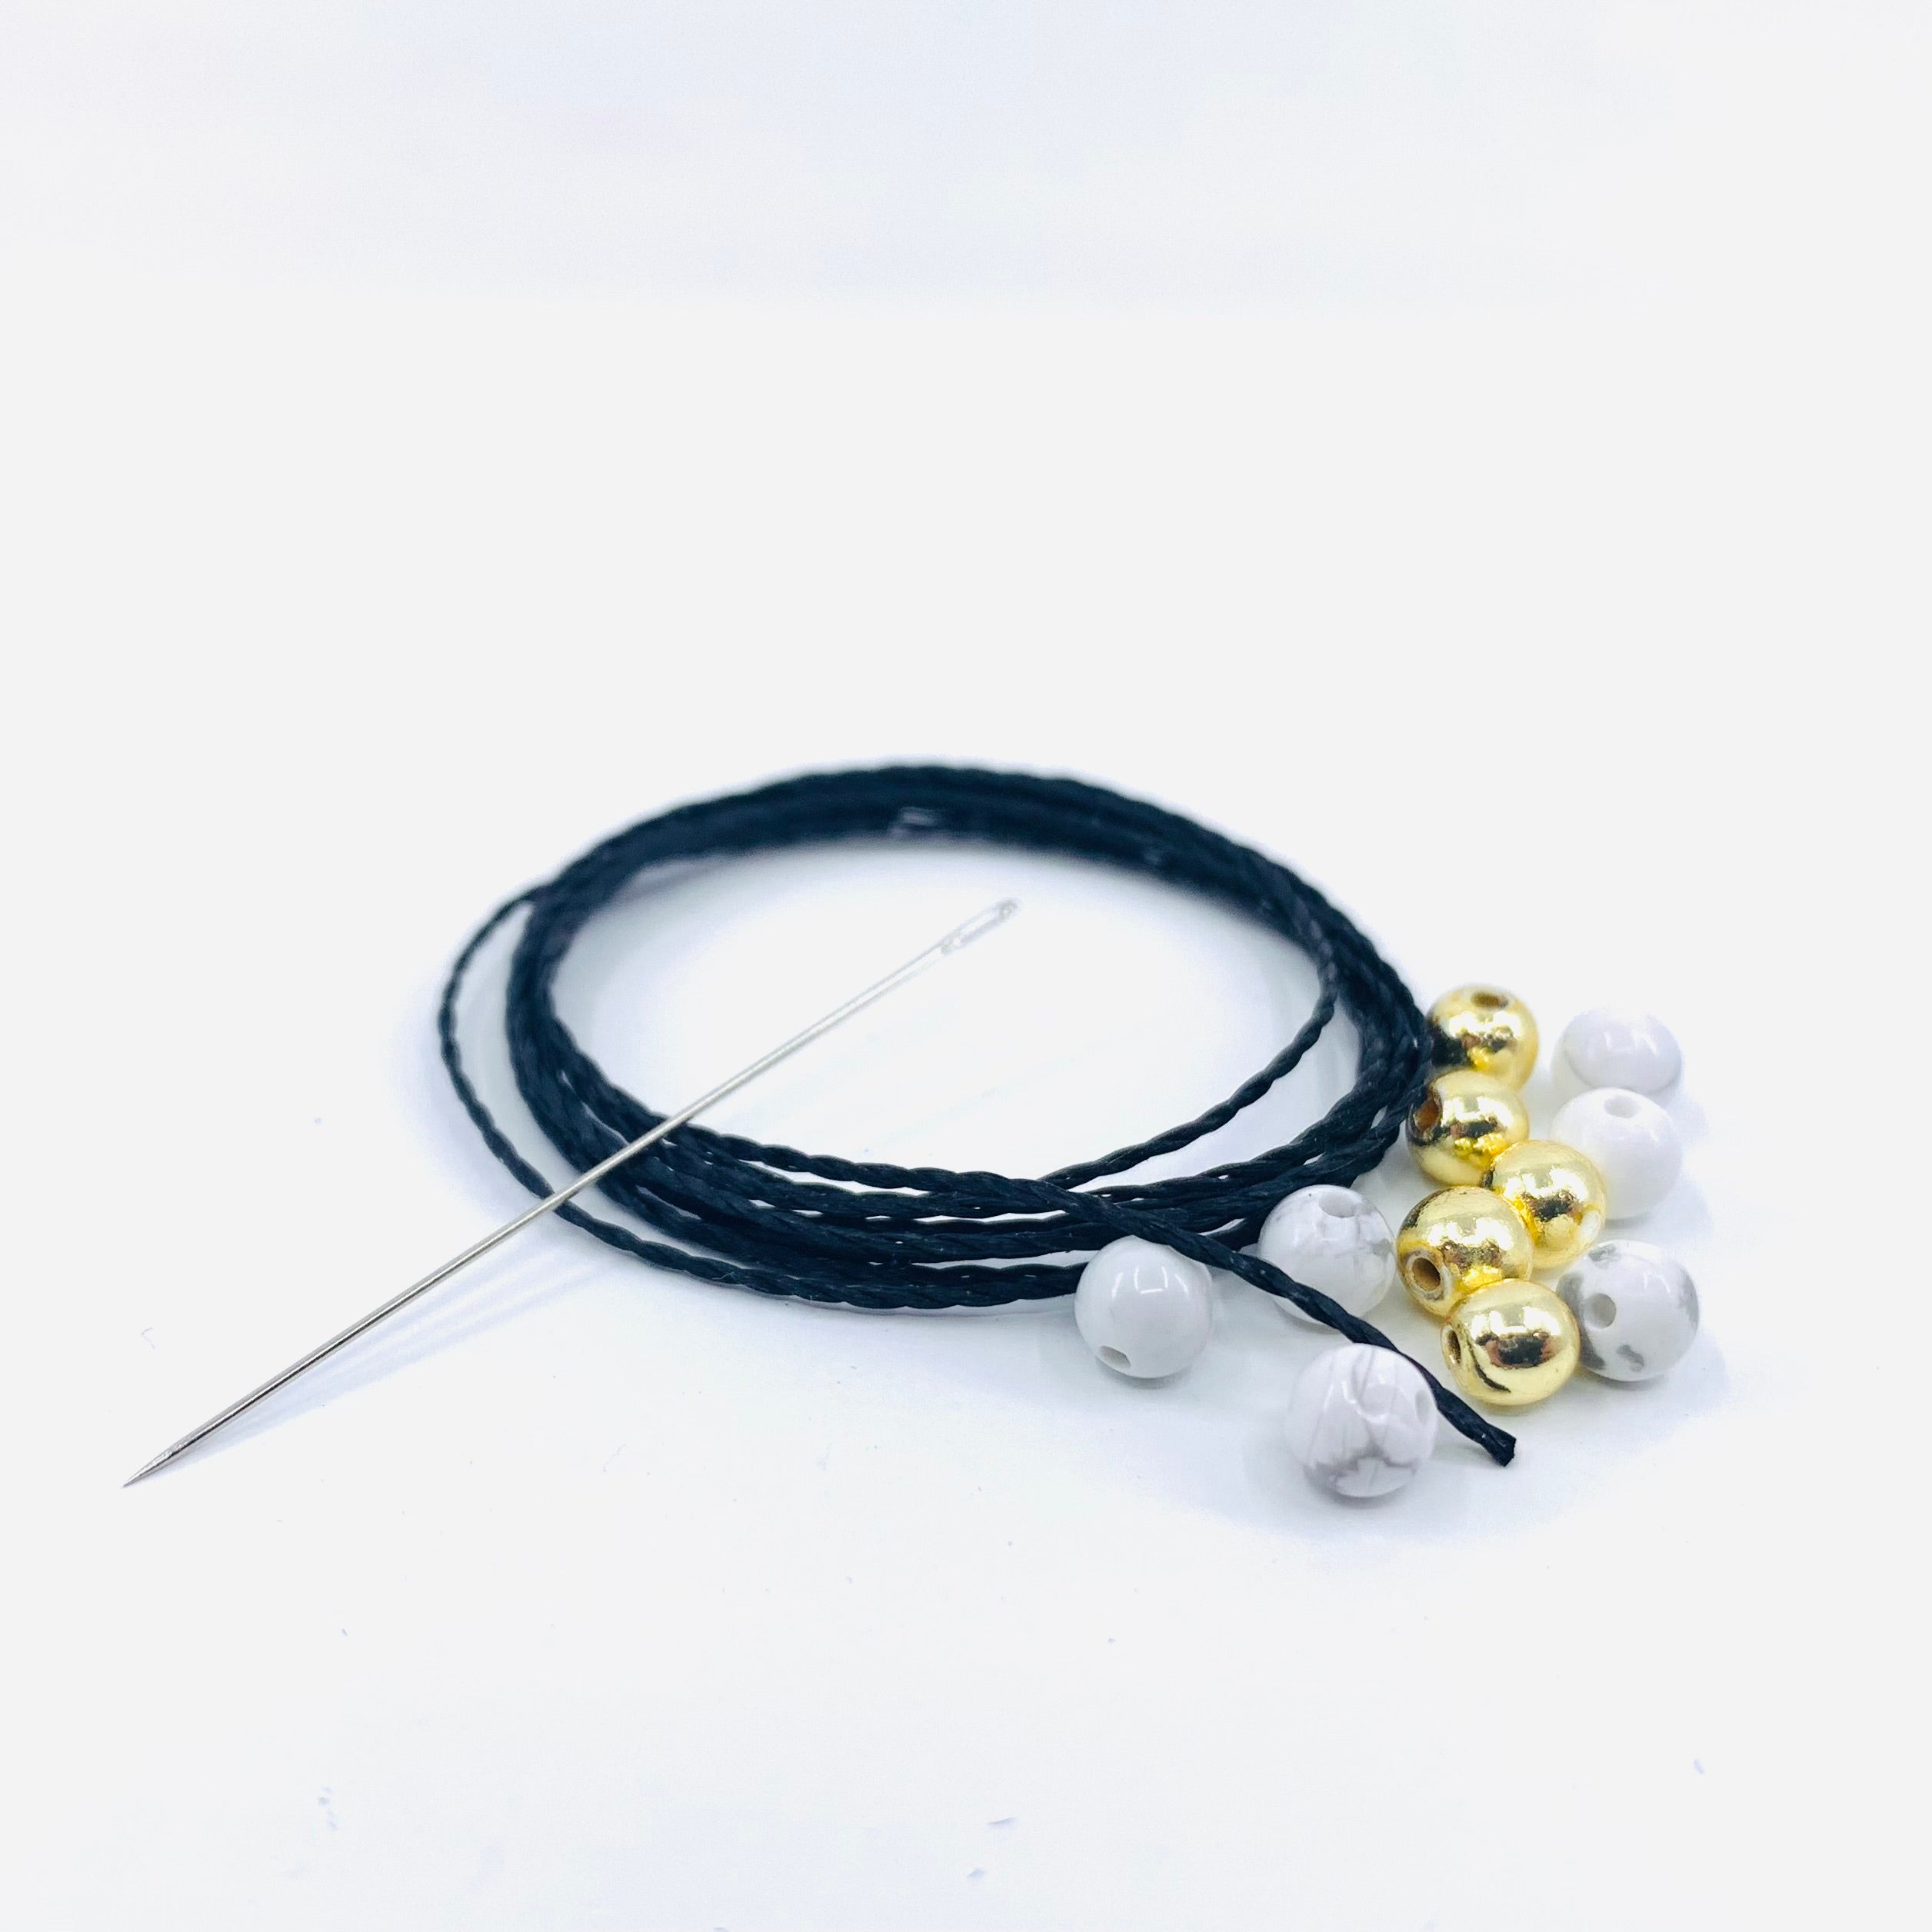 Hicarer DIY Morse Code Bracelet Making Kit, 800 Round and 800 Long Tube  Spacer Beads Handmade Adjustable Bracelets Necklaces 20 Morse Code Decoding